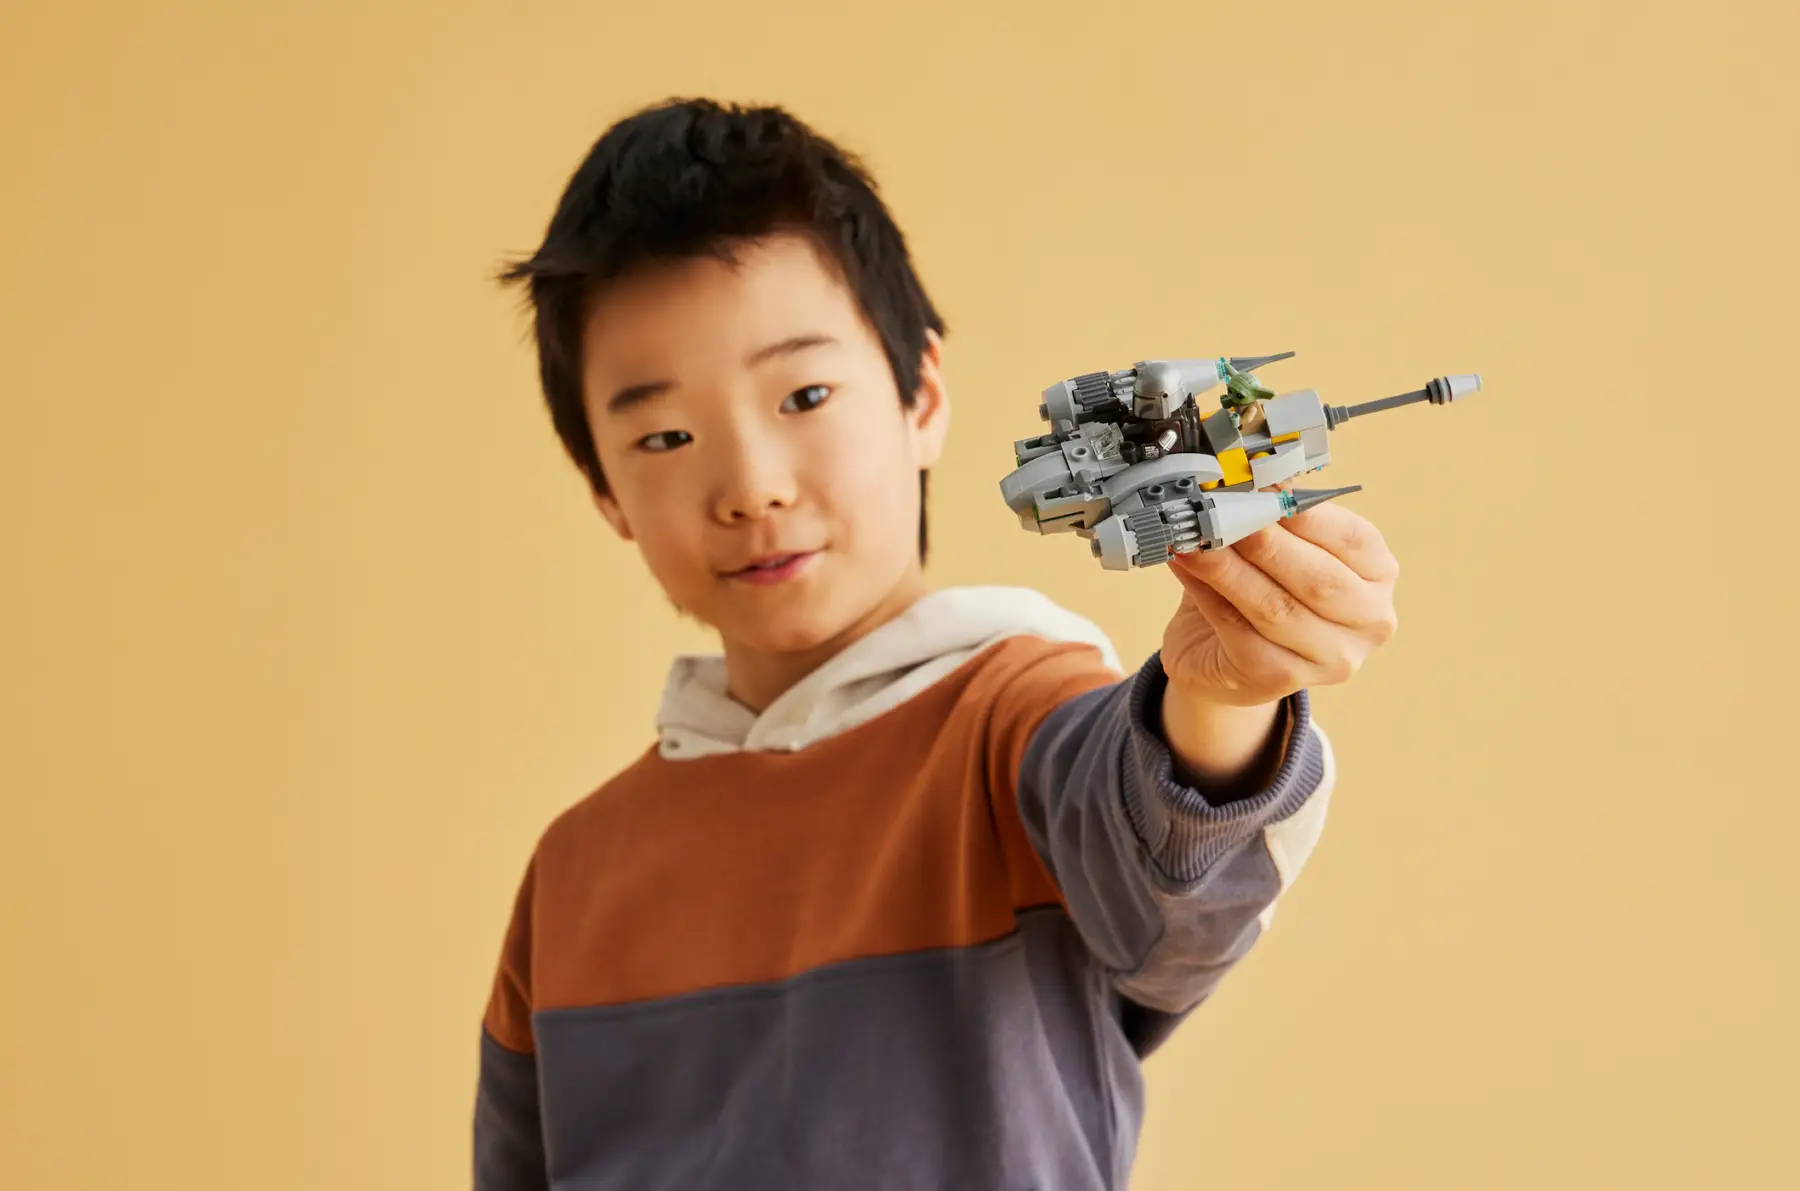 Lego Star Wars - The Mandalorian N-1 Starfighter™ Microfighter 75363